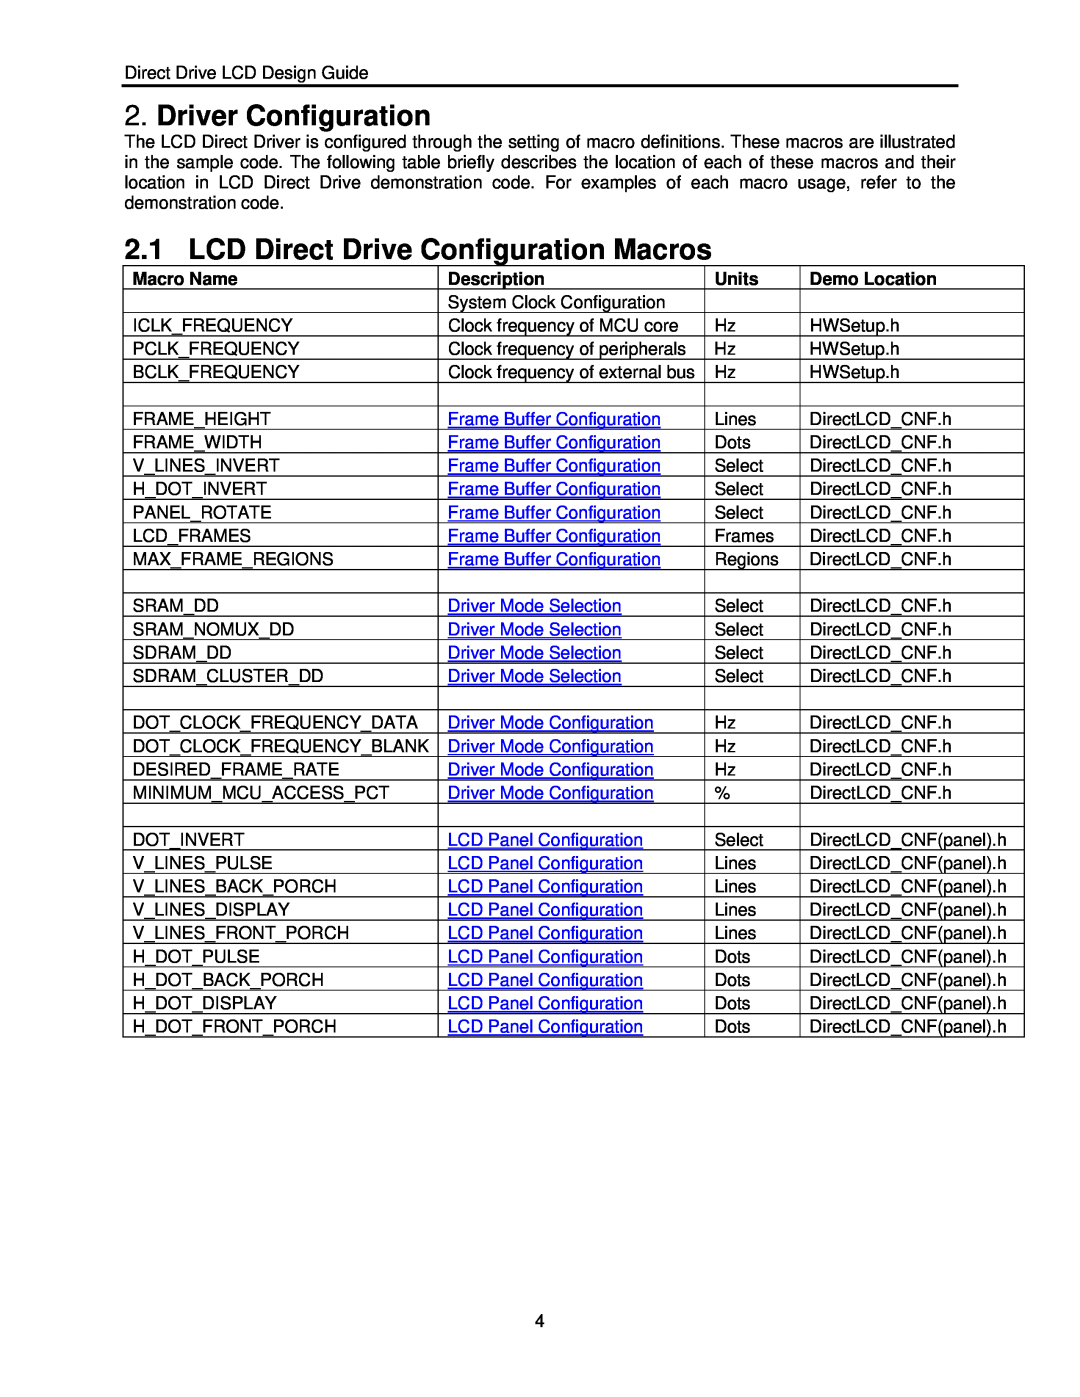 Renesas H8S Driver Configuration, LCD Direct Drive Configuration Macros, Macro Name, Description, Units, Demo Location 